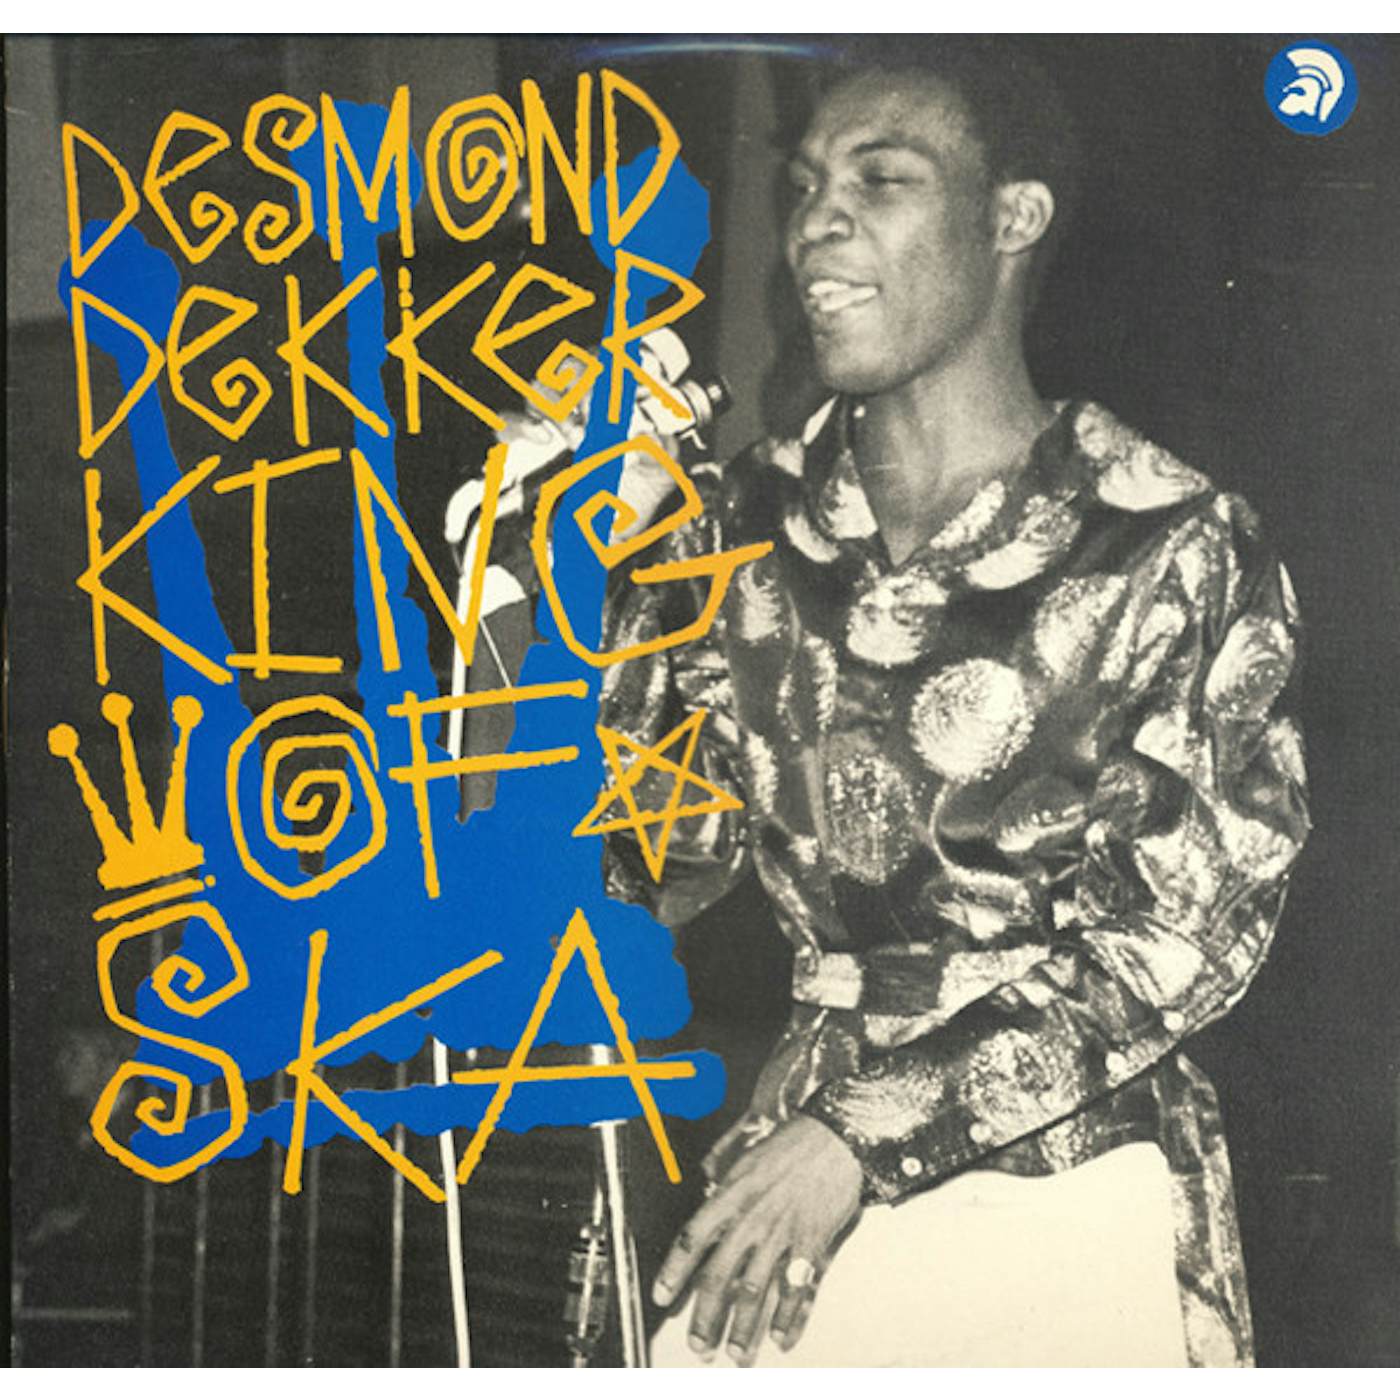 Desmond Dekker King of Ska Vinyl Record